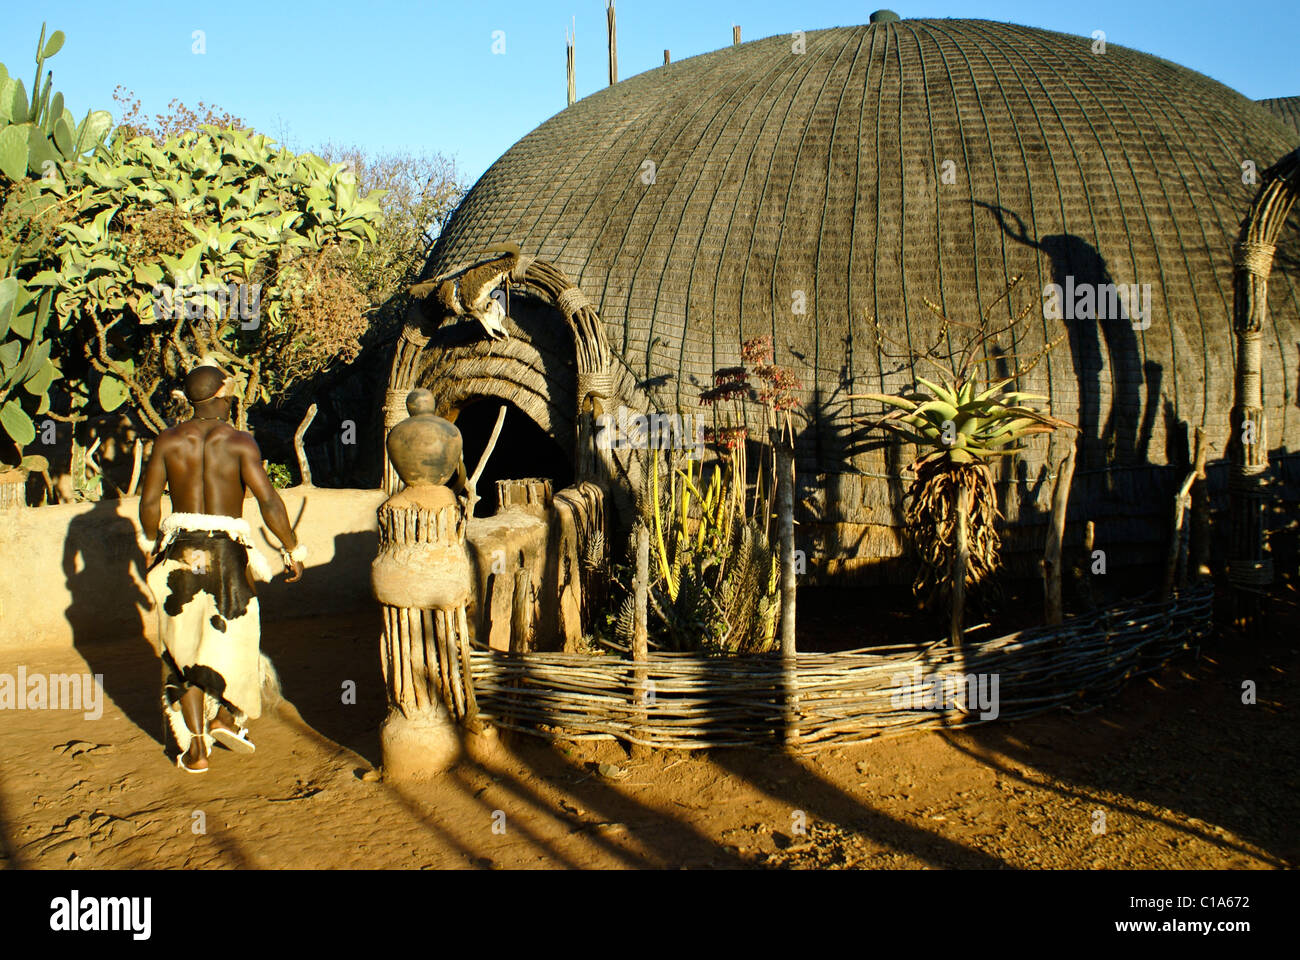 Zulu warrior and sangoma's house, Shakaland, South Africa Stock Photo